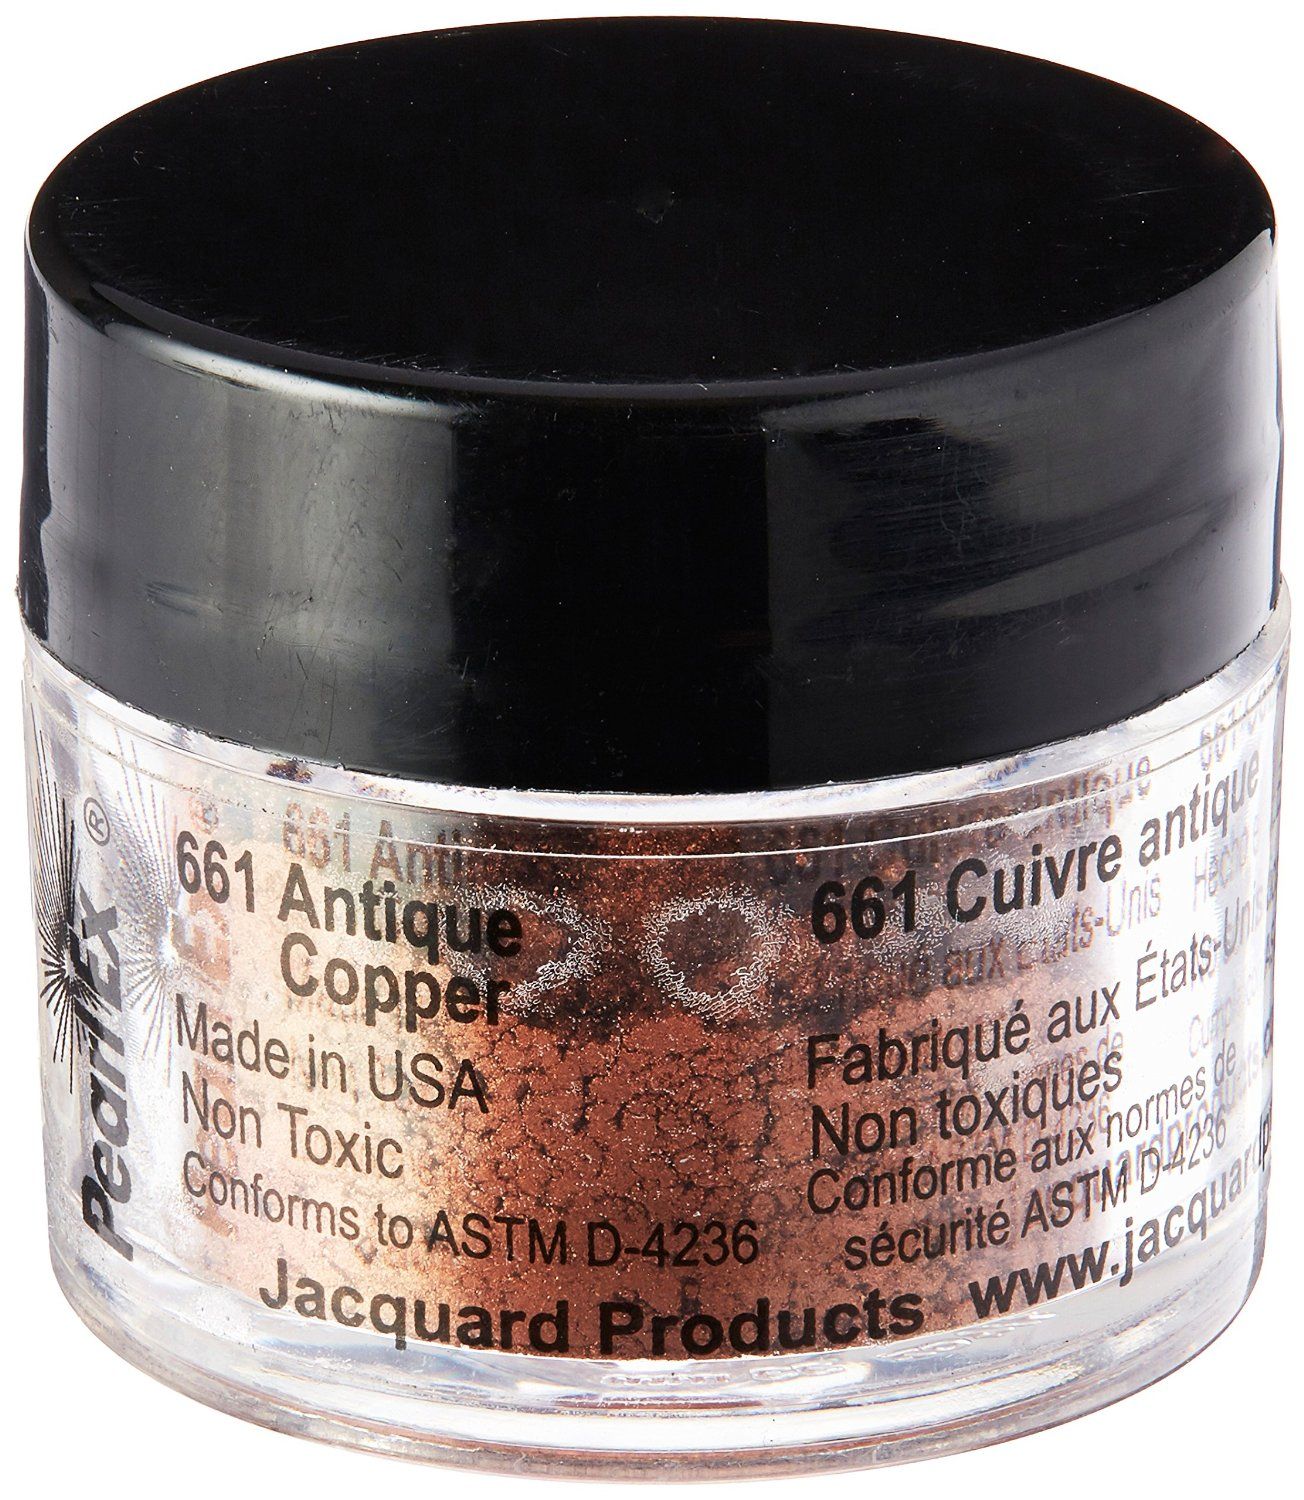 Jacquard Pearl Ex Powdered Antique Copper Pigment 3g